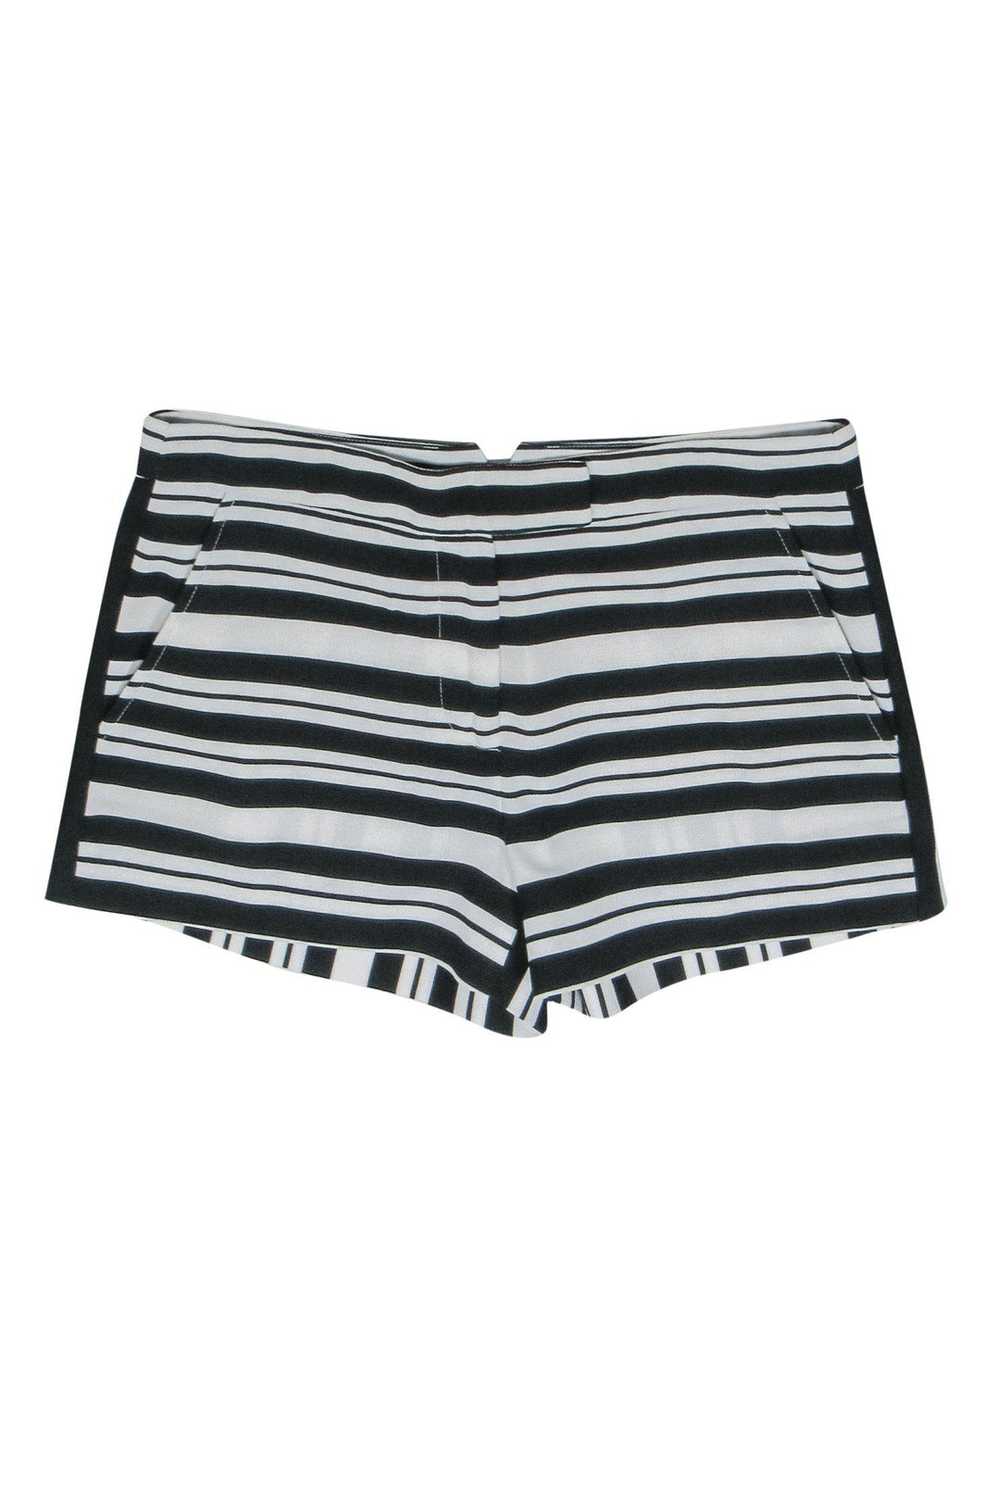 Tibi - Black & White Striped Shorts Sz 0 - image 1